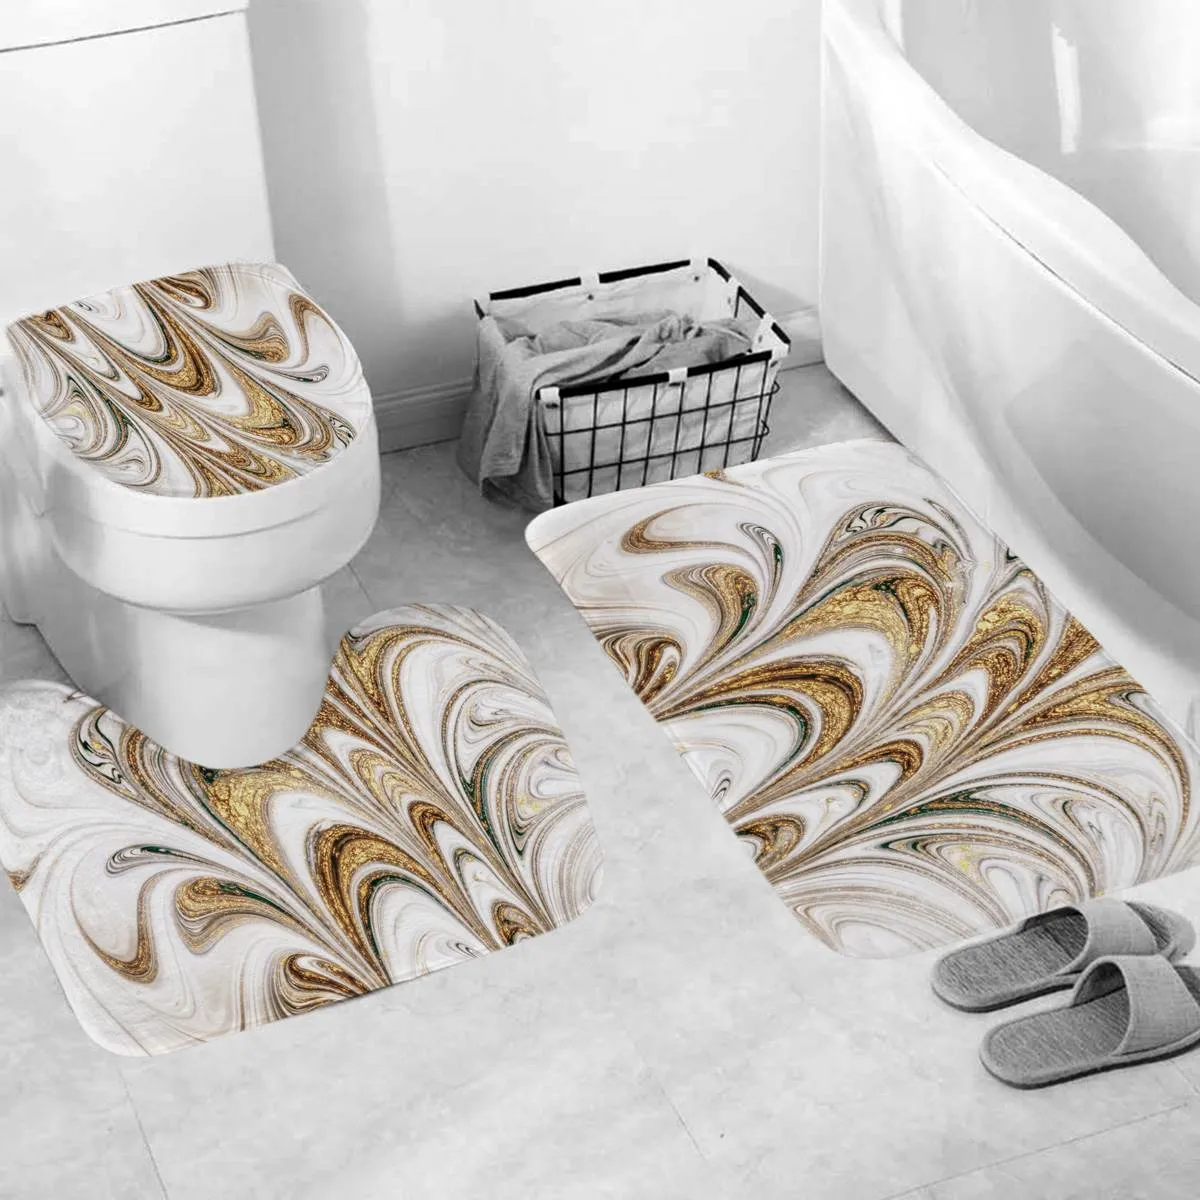 Bathroom Set Waterproof Shower Curtain Nonslip Mats Bath Carpets Toilet Seat Cover Lid Floor Mat Bathroom Decor 180cmx180cm LJ2017584658